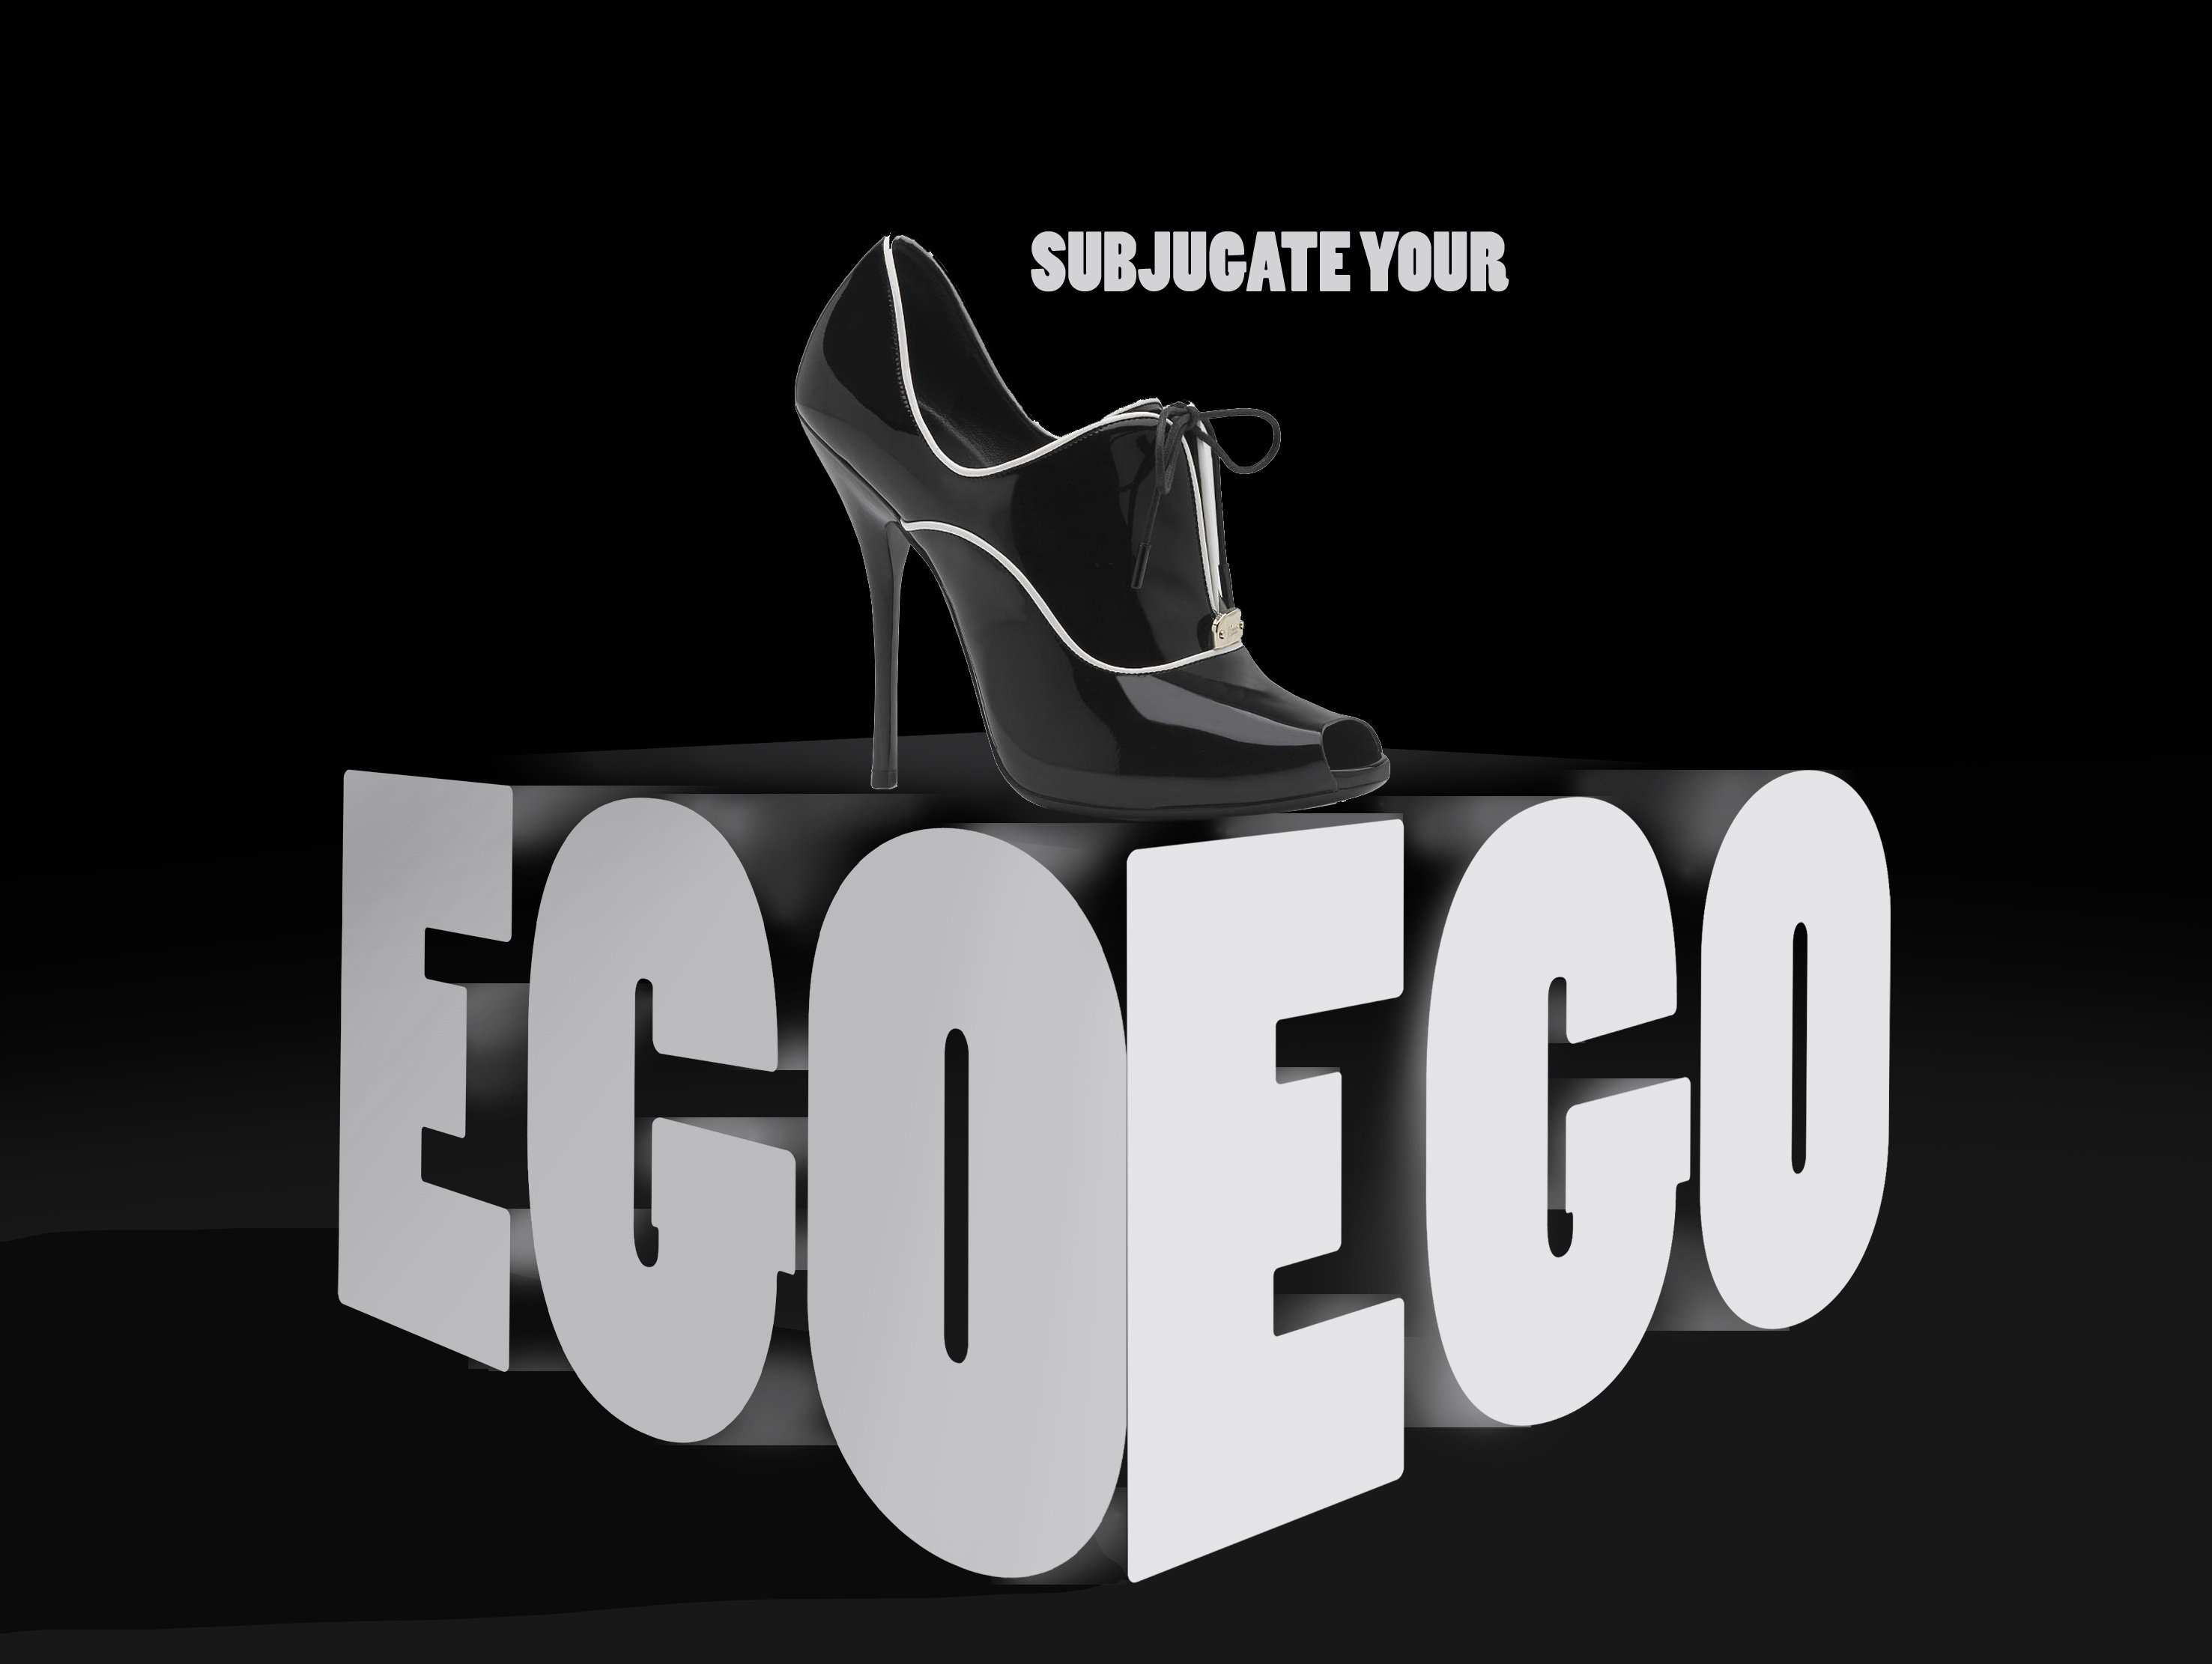 shoe, Fetish, Ego, Poster Wallpaper